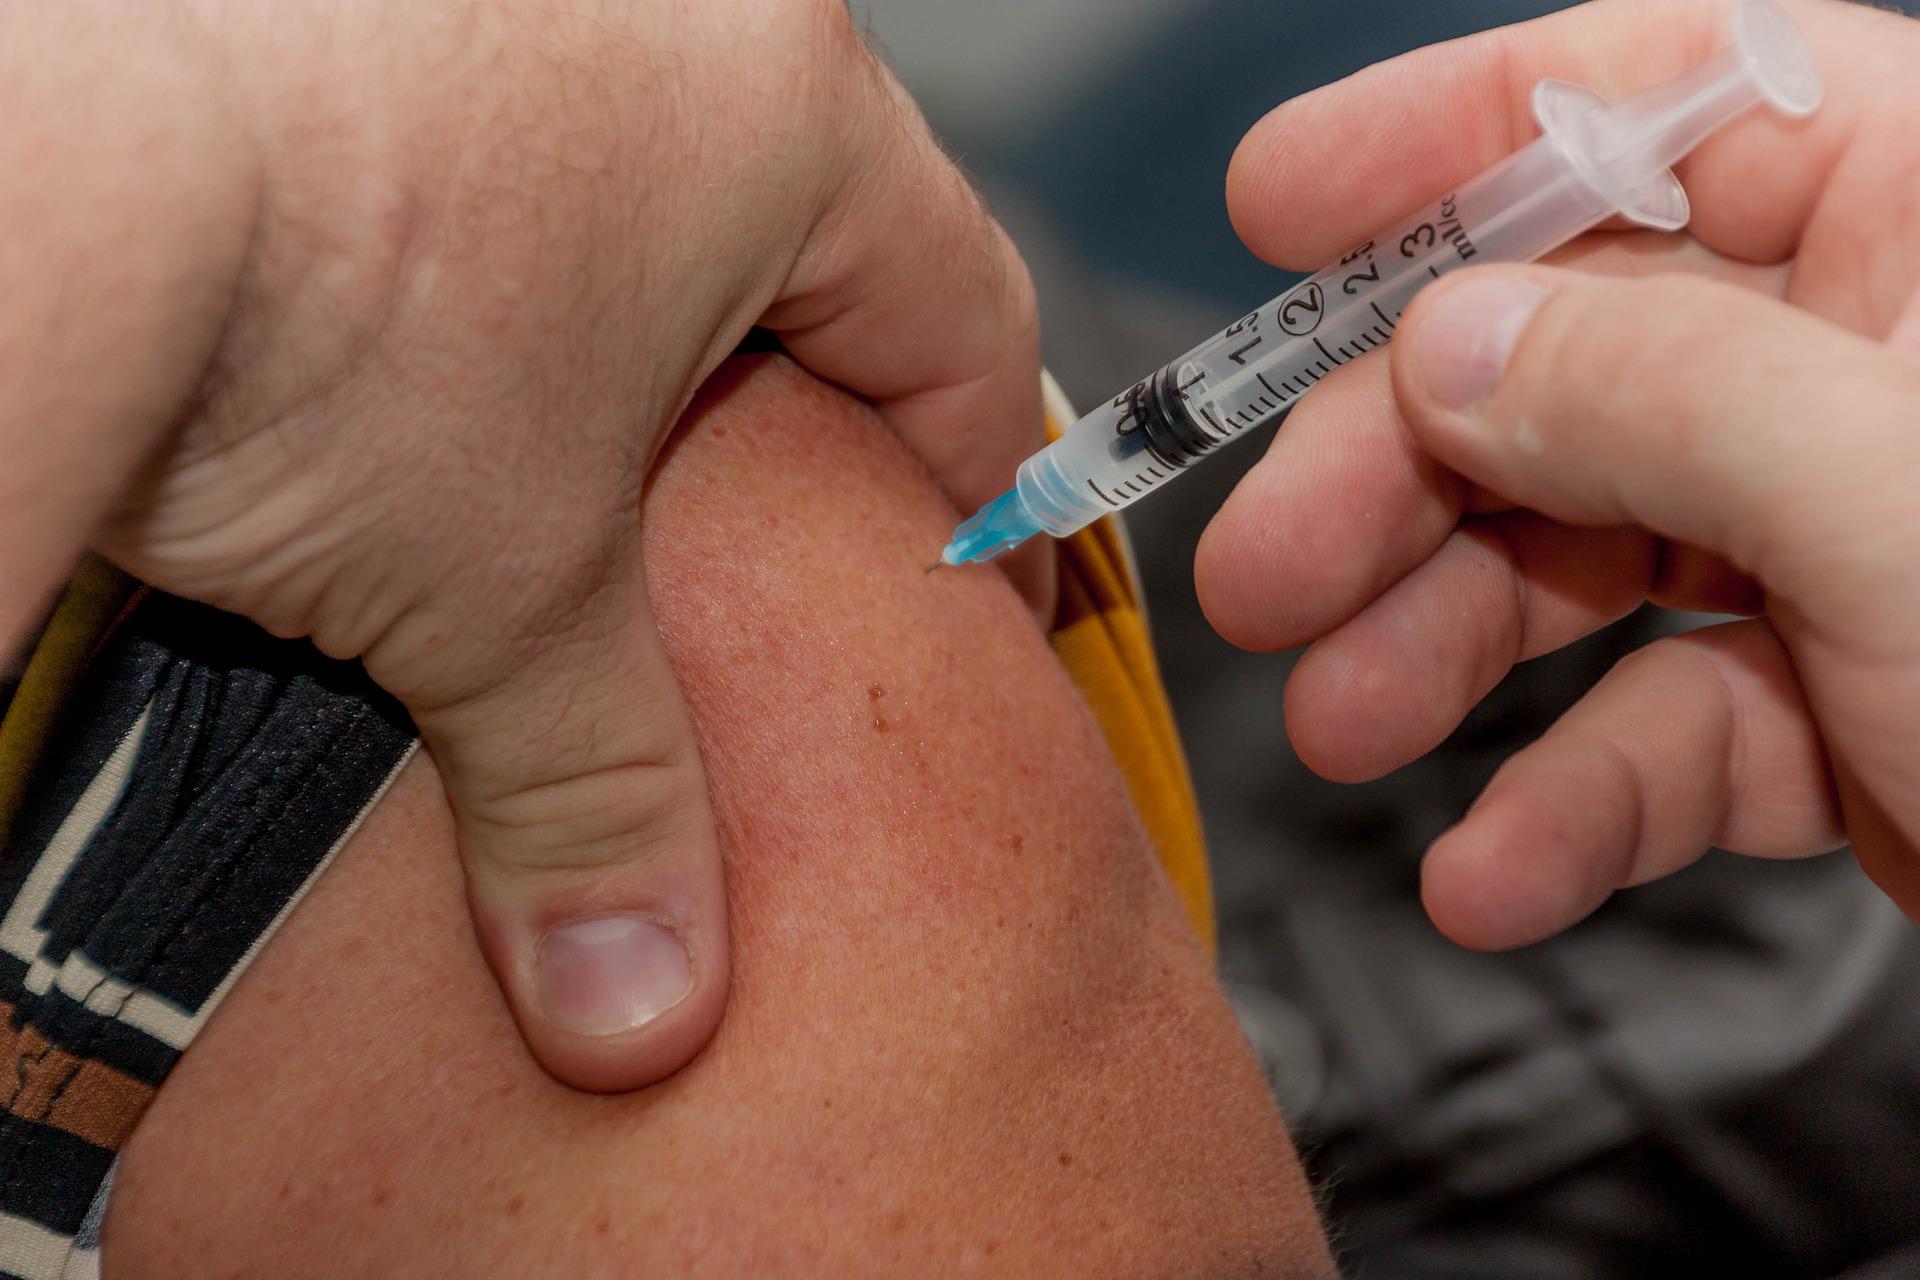 AstraZeneca admits Covid vaccine can cause blood clots in rare cases